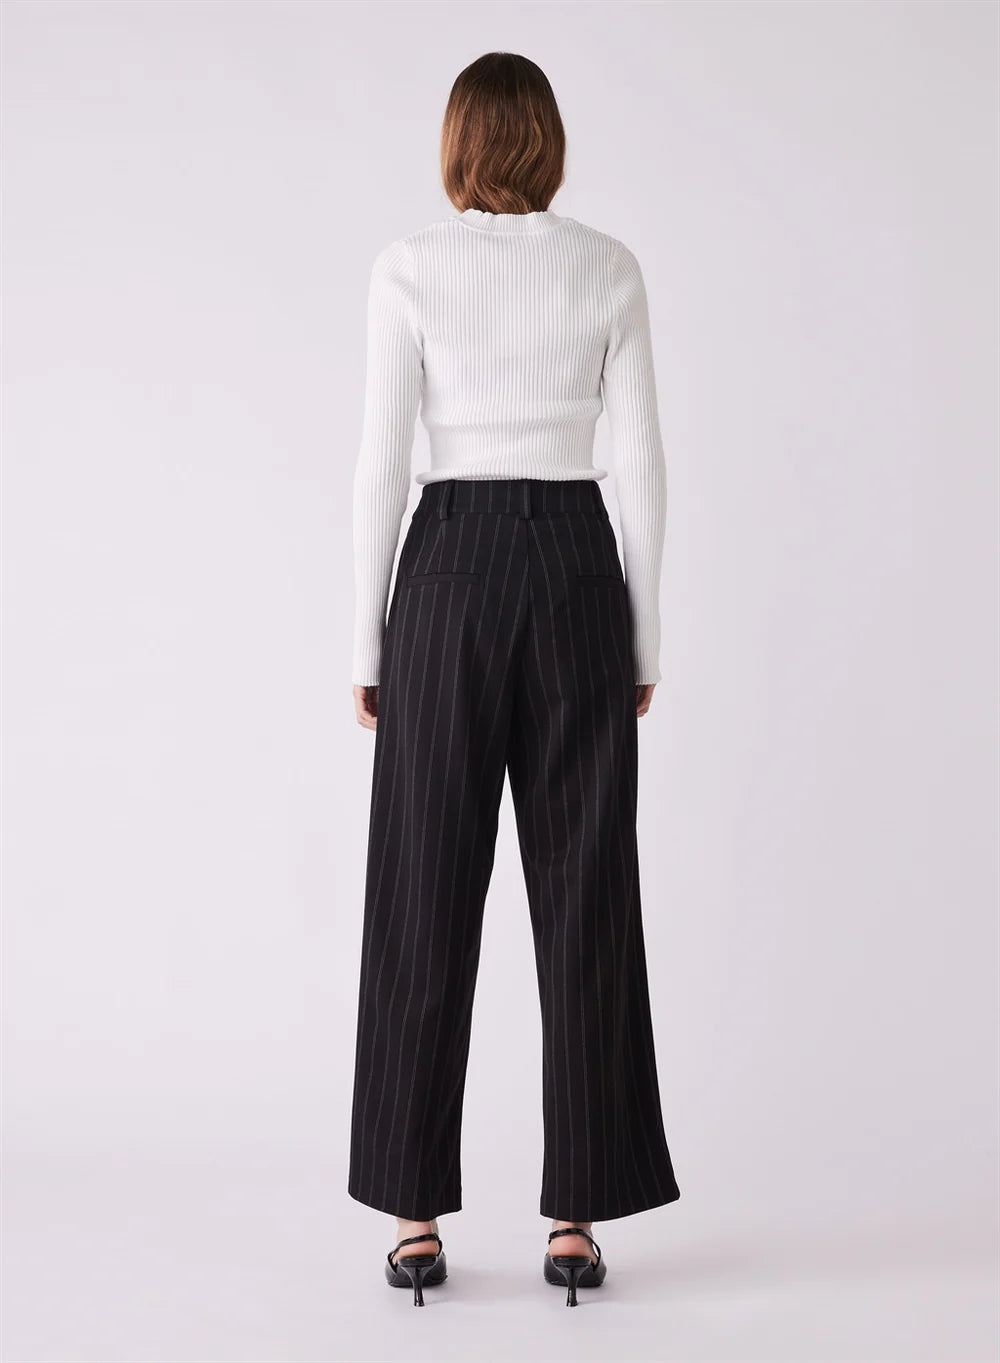 Esmaee Studio Tailored Pants | Black Pinstripe